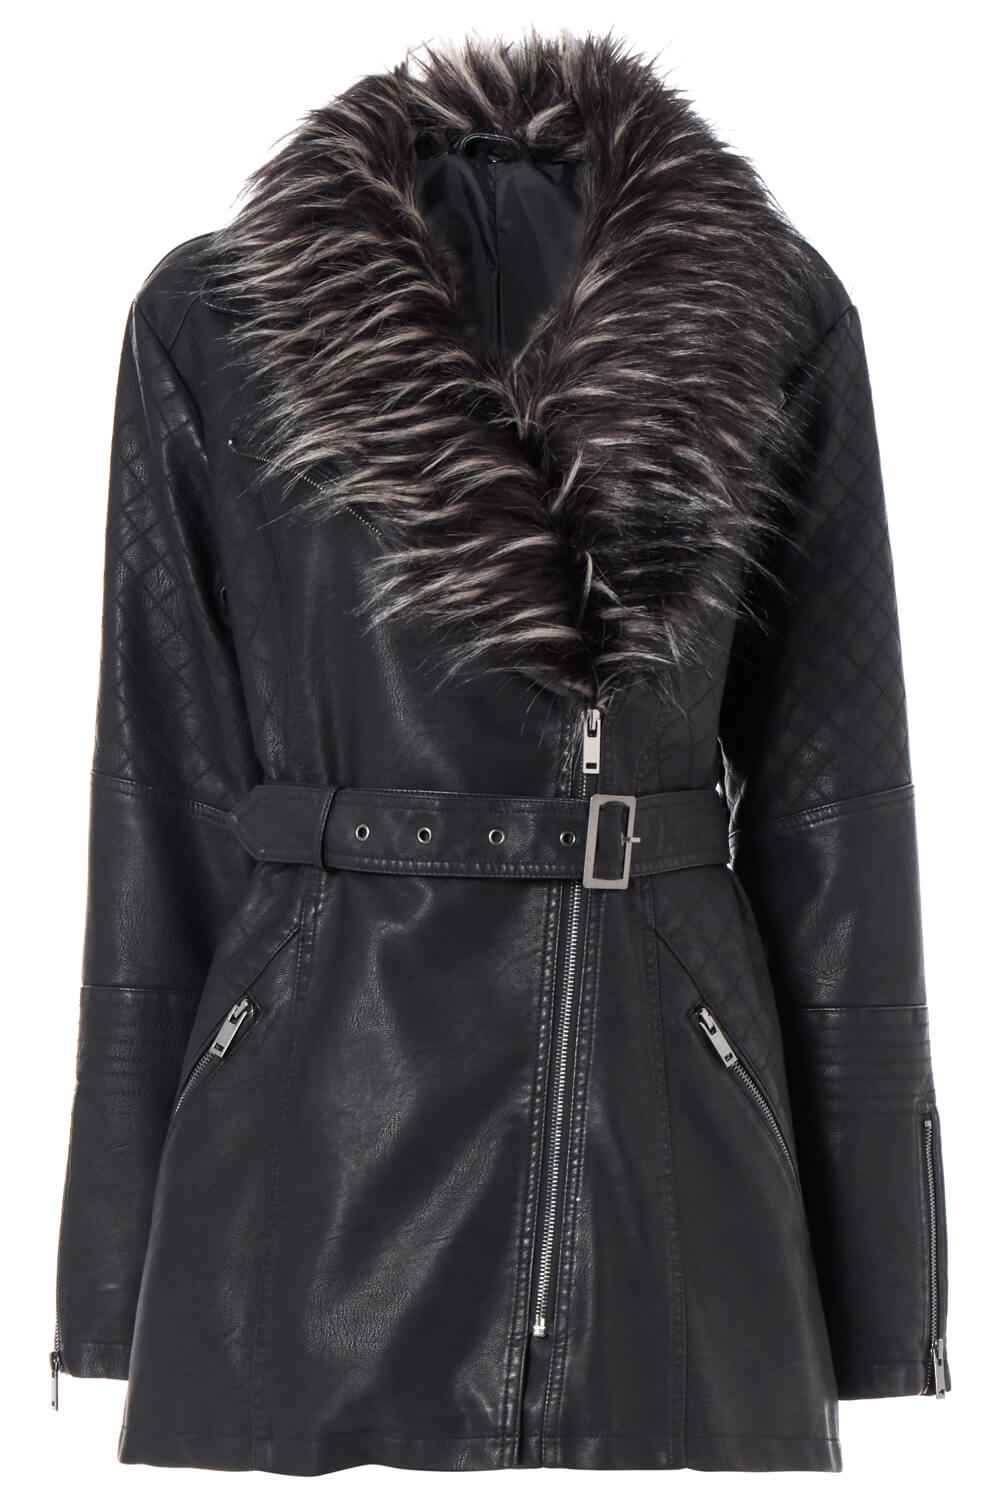 Black Longline Faux Leather Coat, Image 5 of 5